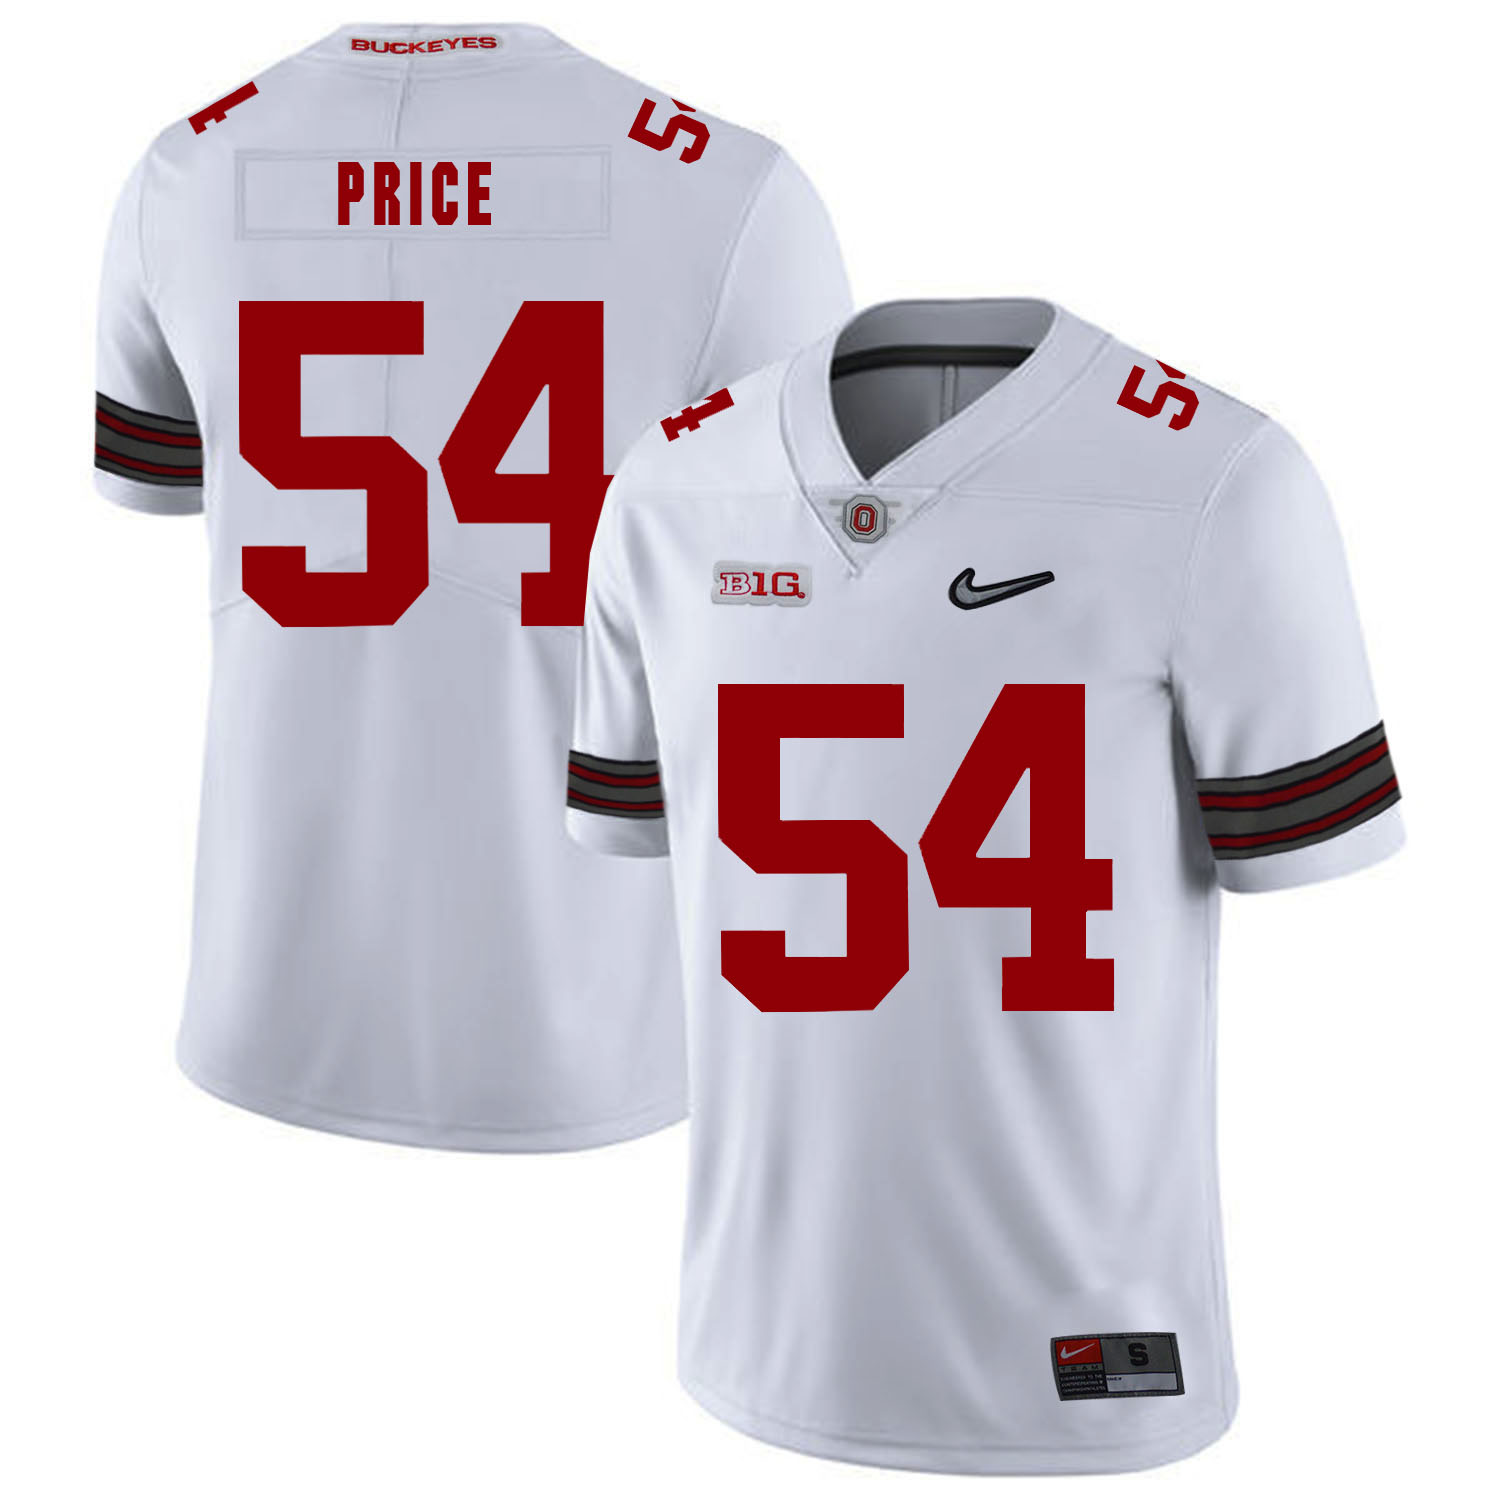 Ohio State Buckeyes 54 Billy Price White Diamond Nike Logo College Football Jersey